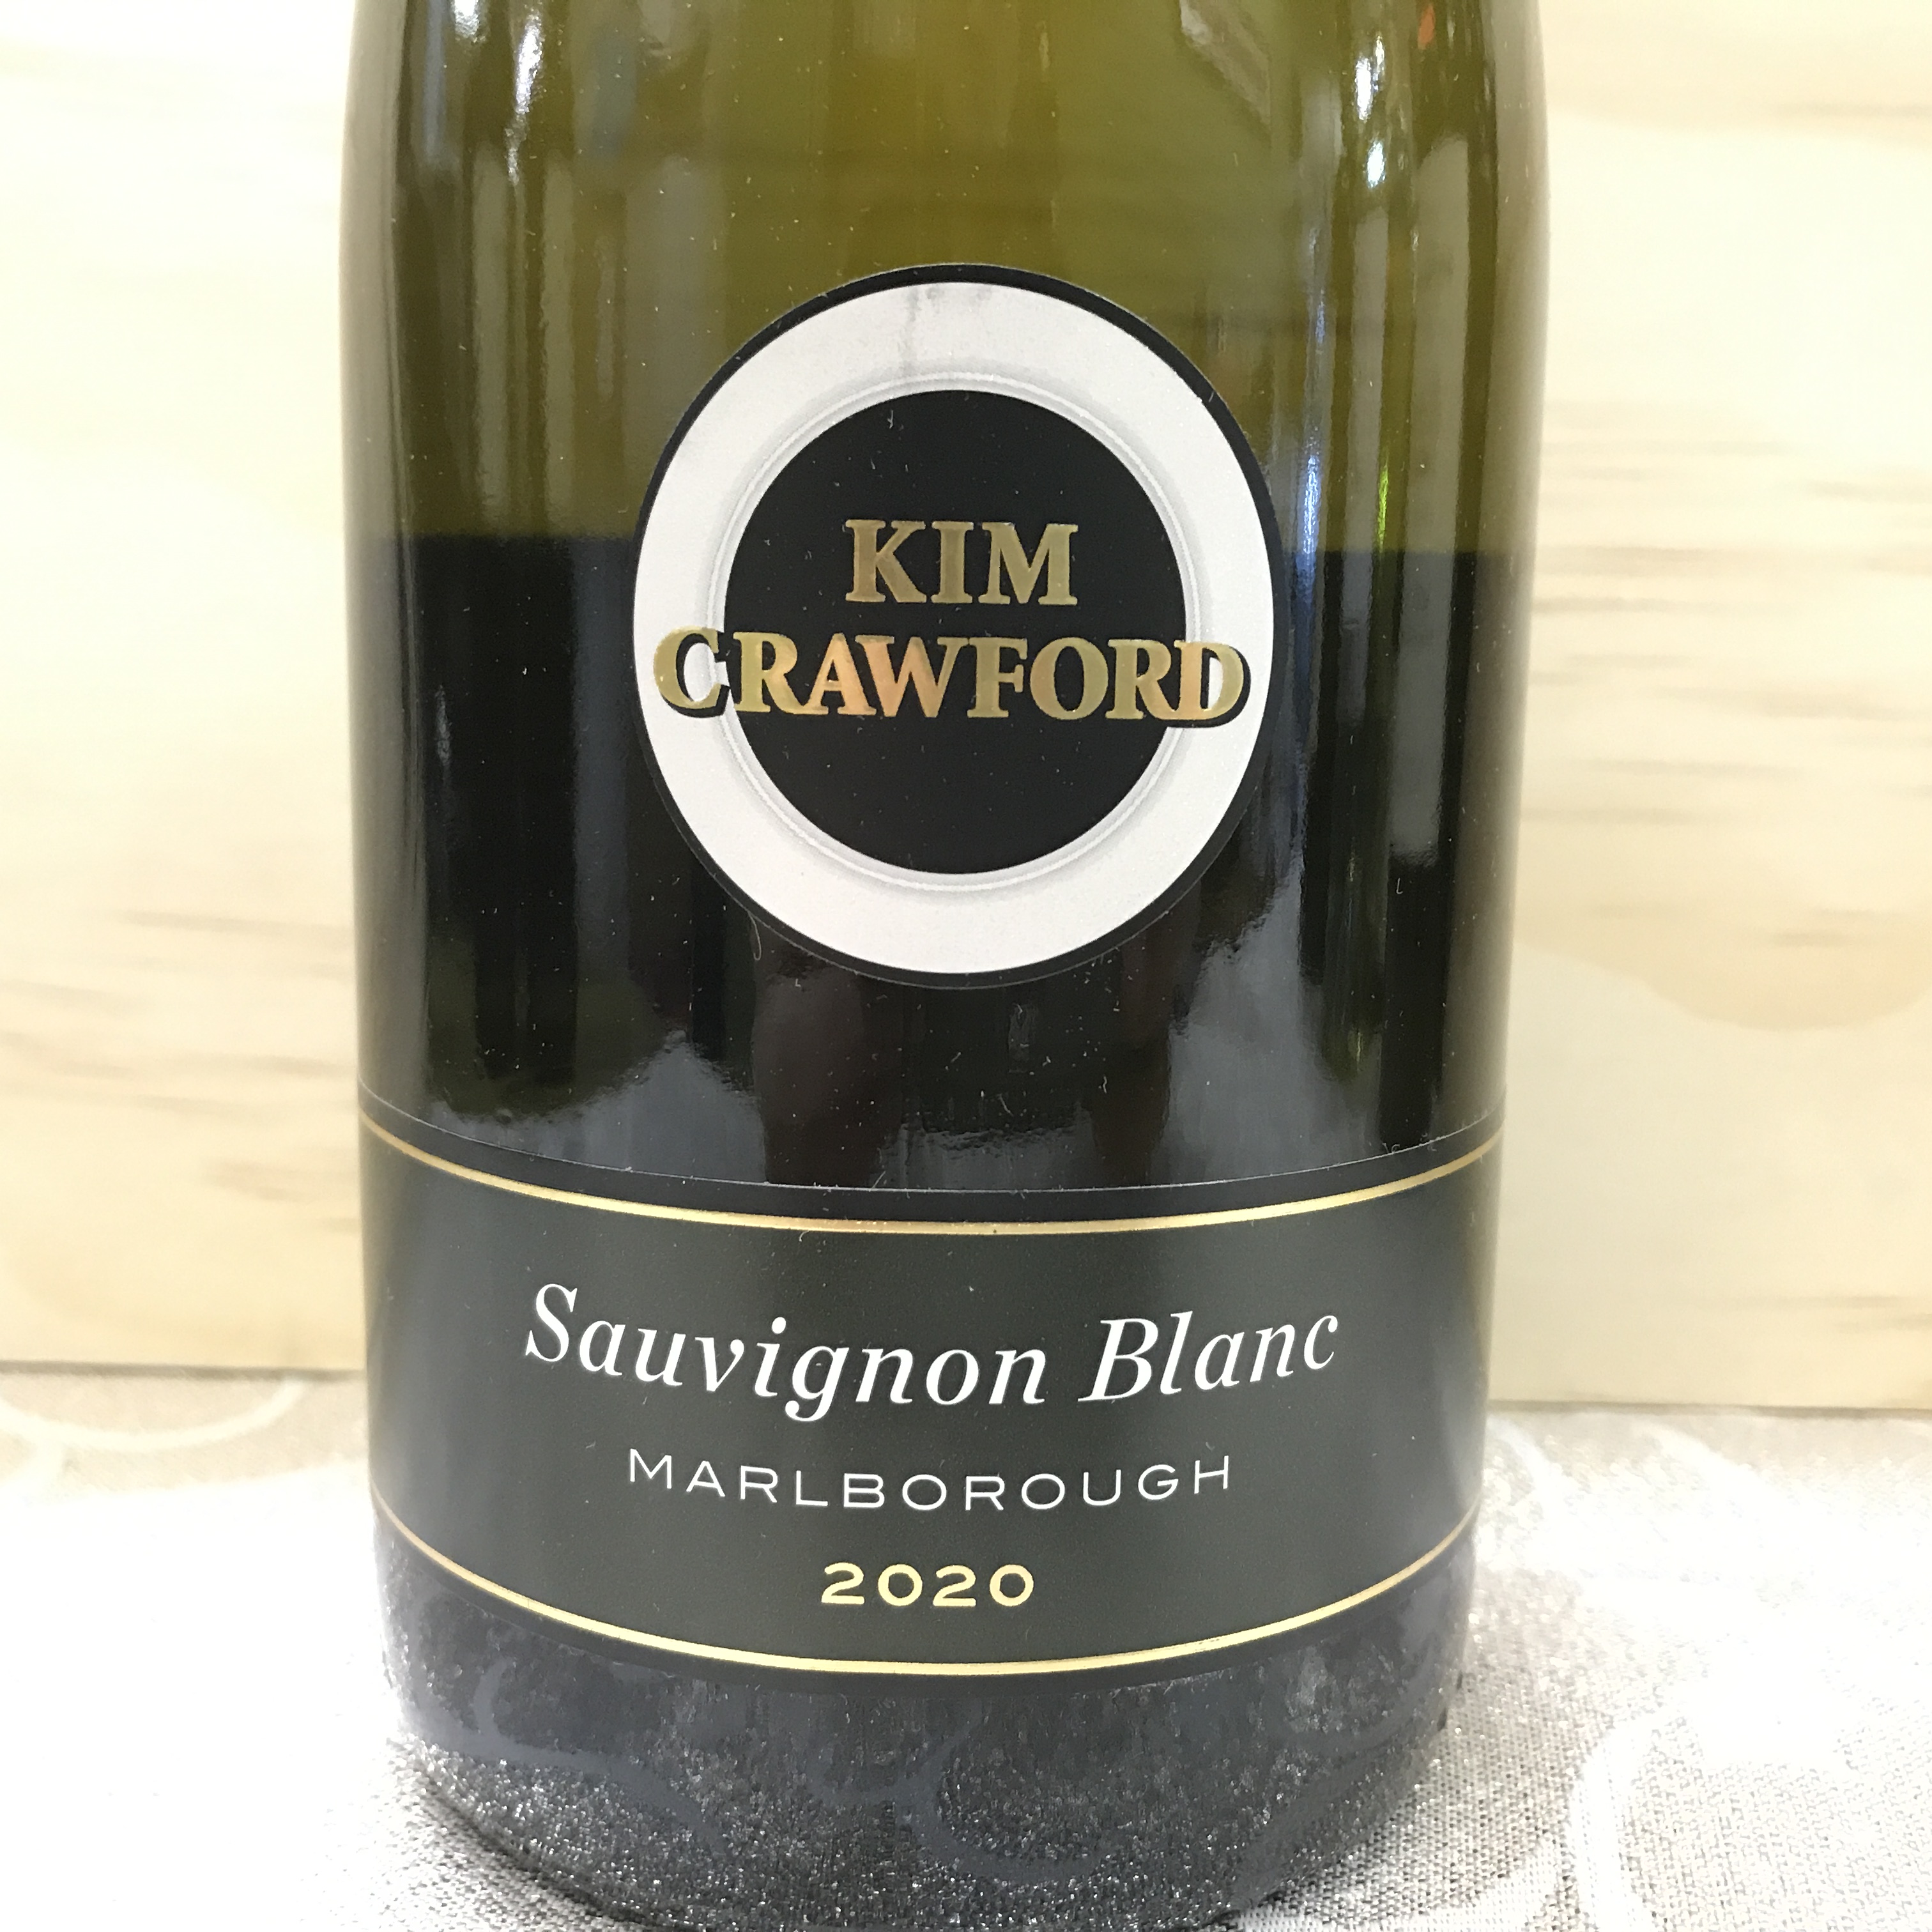 Kim Crawford Marlborough Sauvignon Blanc 2020